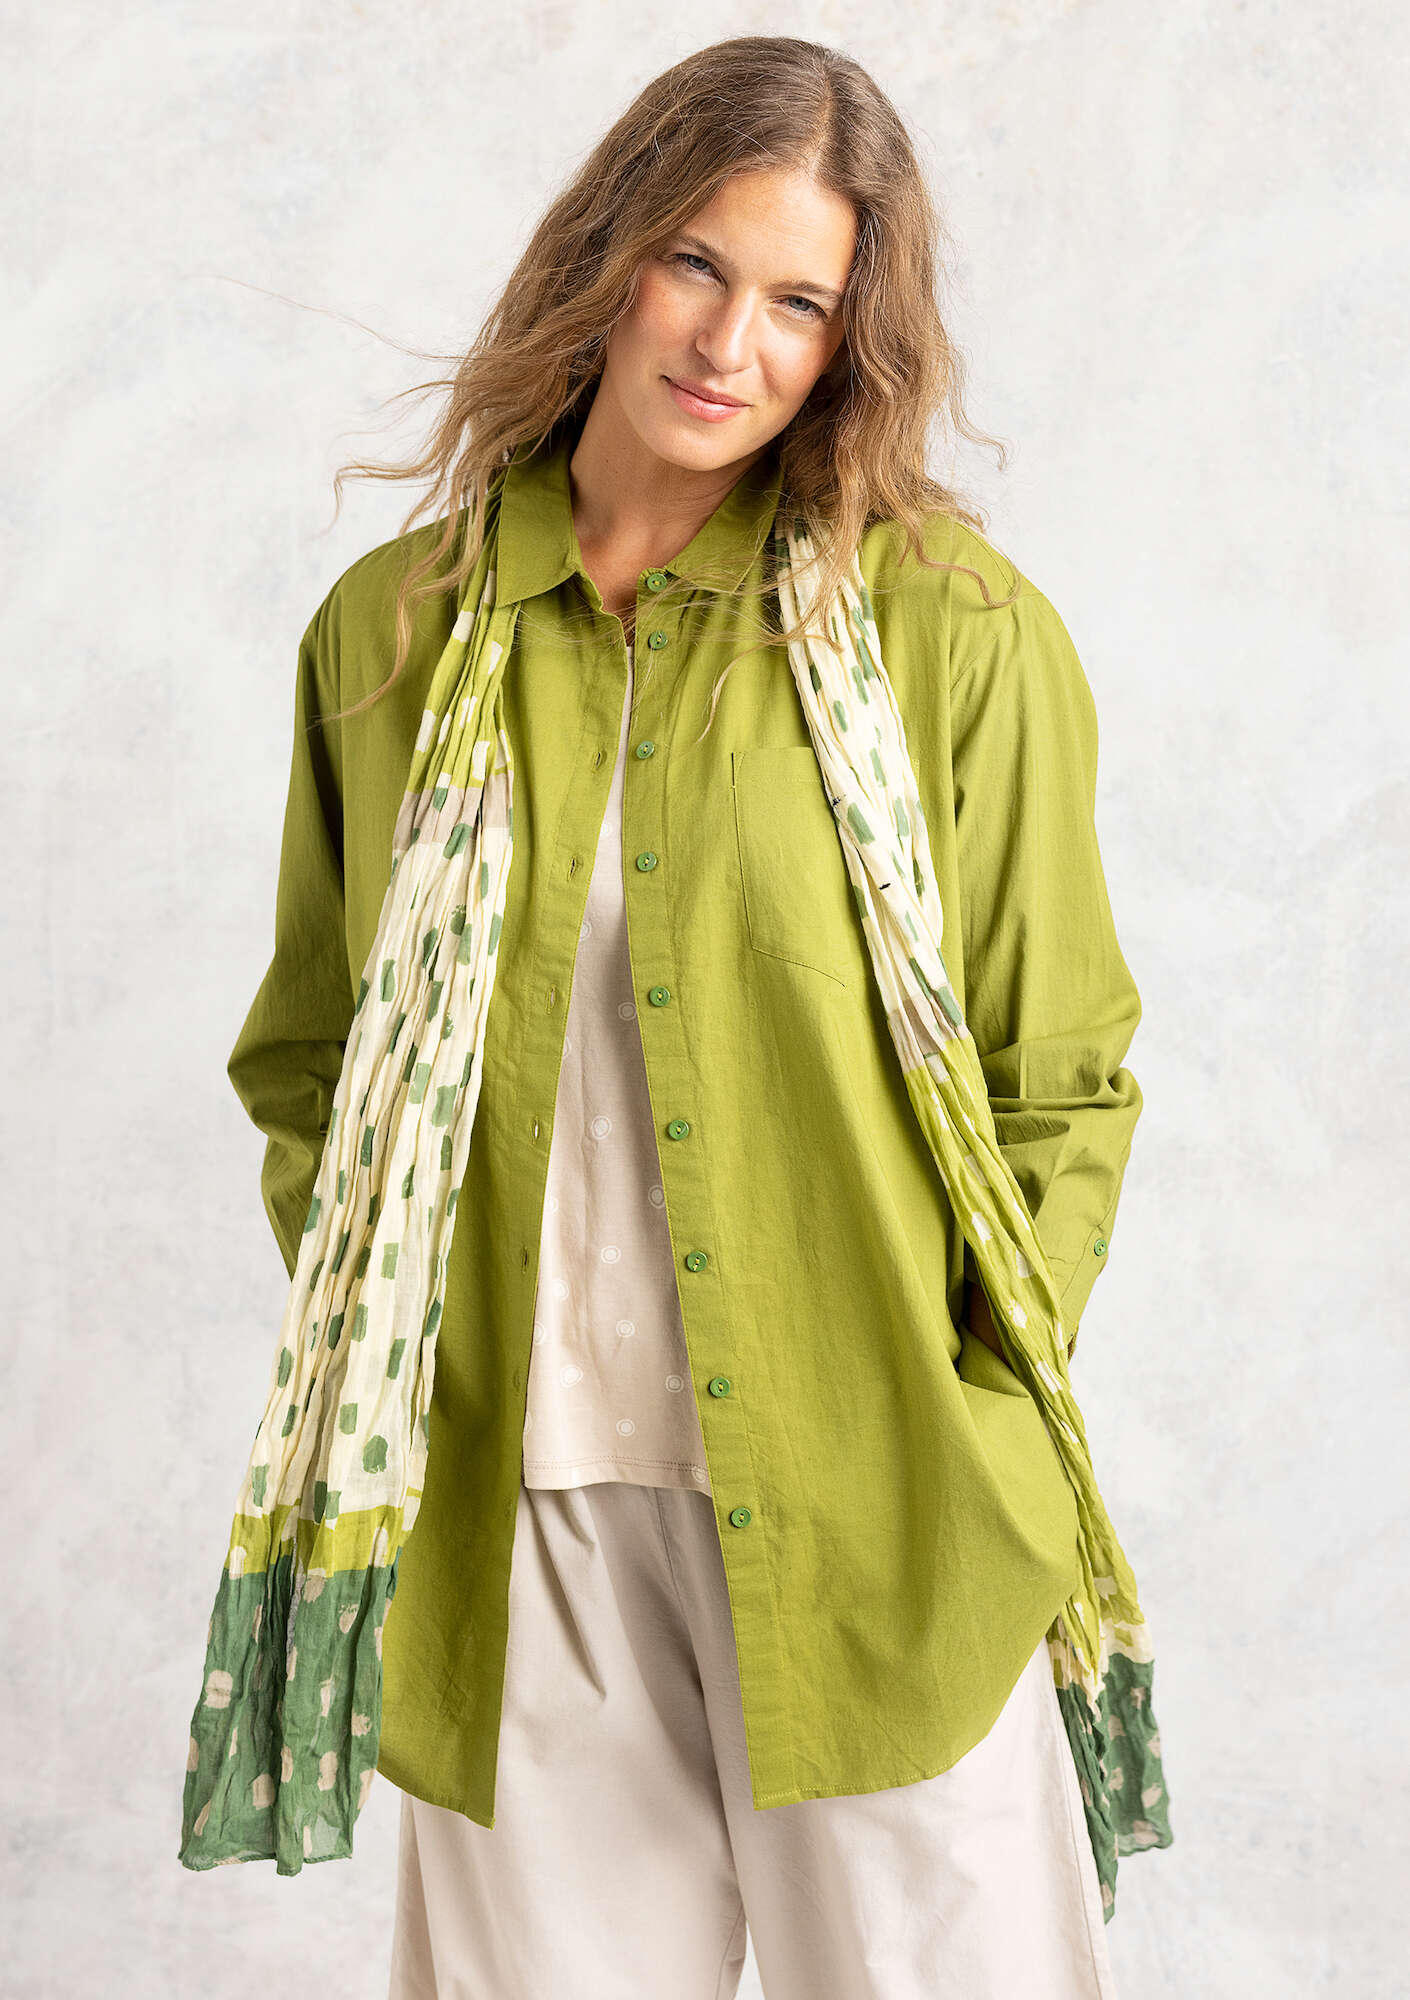 Oversized “Hi” woven shirt in organic cotton birch leaf